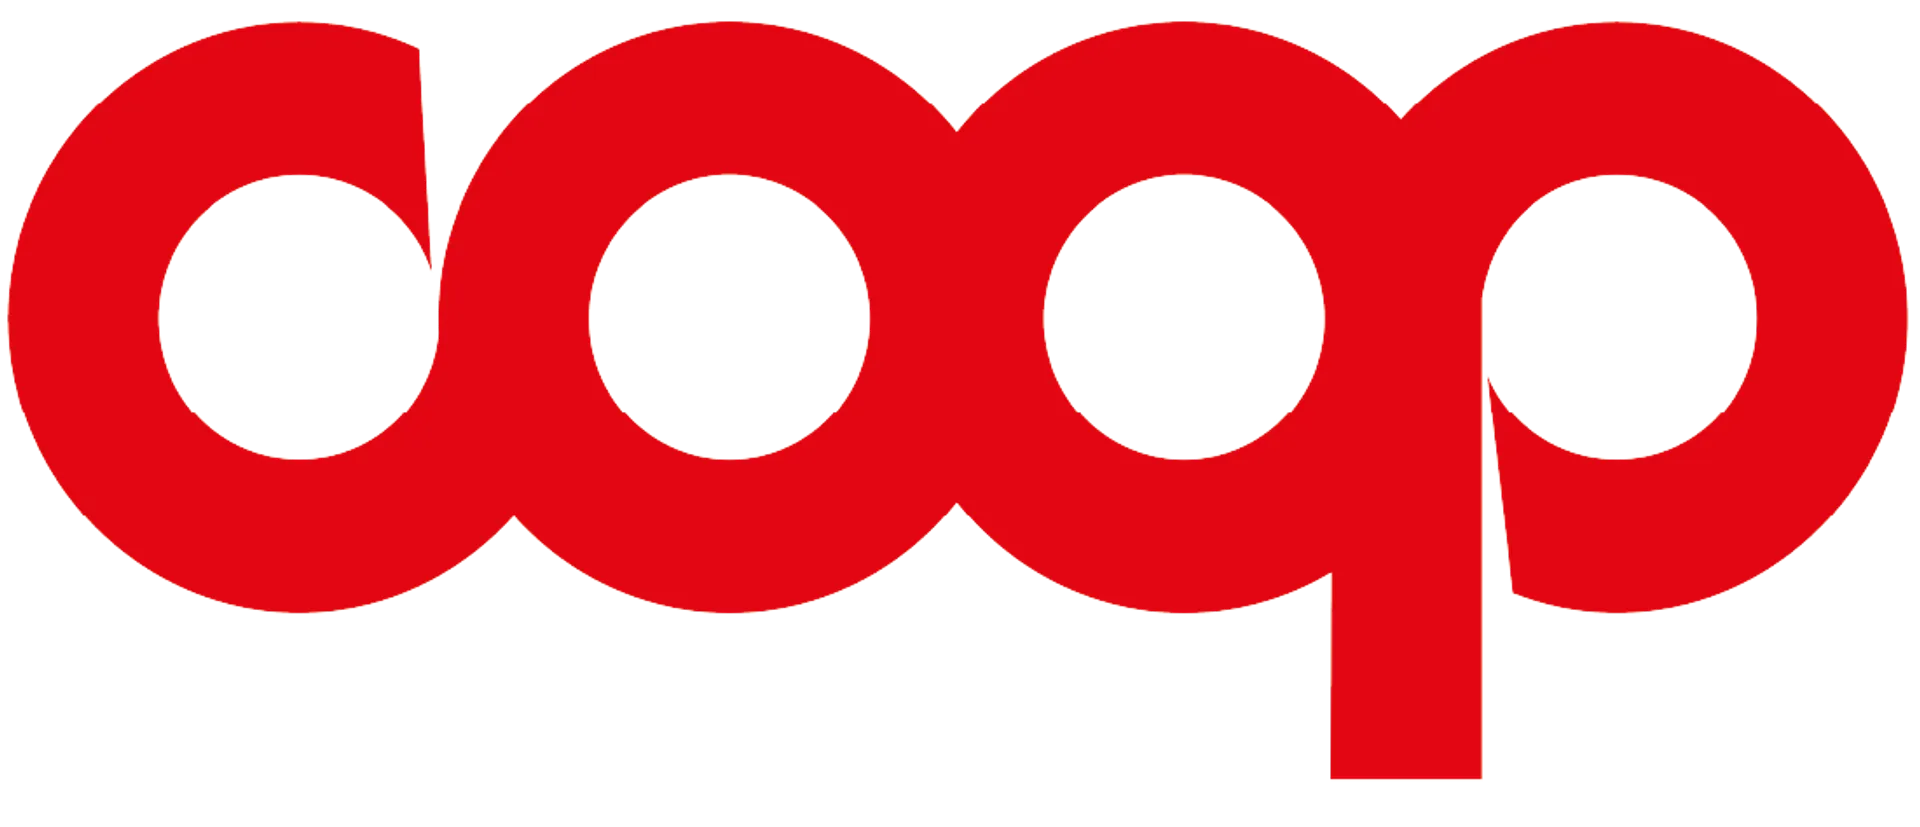 COOP logo